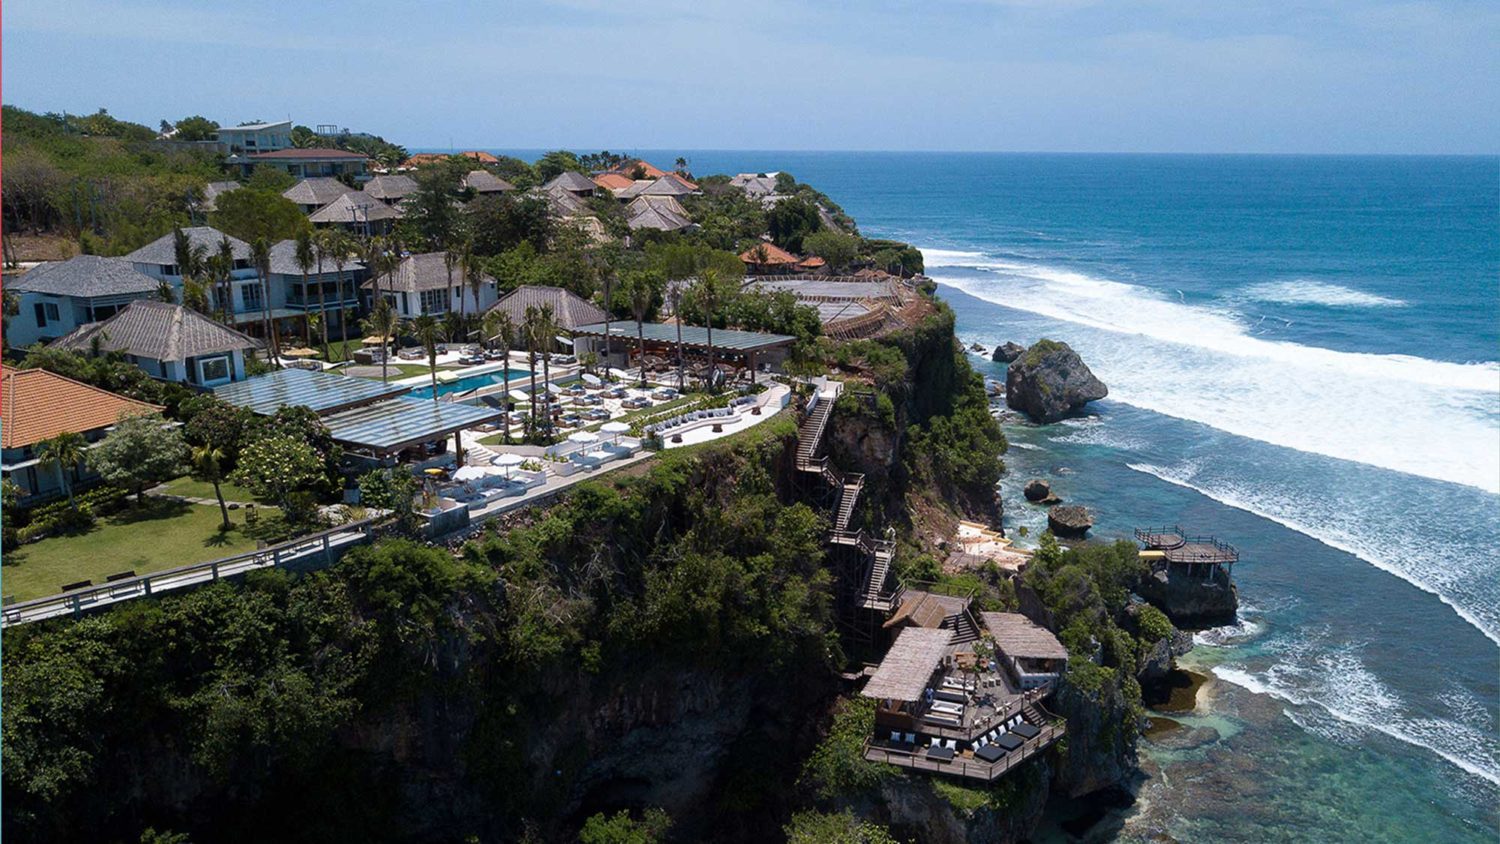 Ulu Cliff House - Beach Club in Bali - Interior Design - Bali Architect - Building Facade